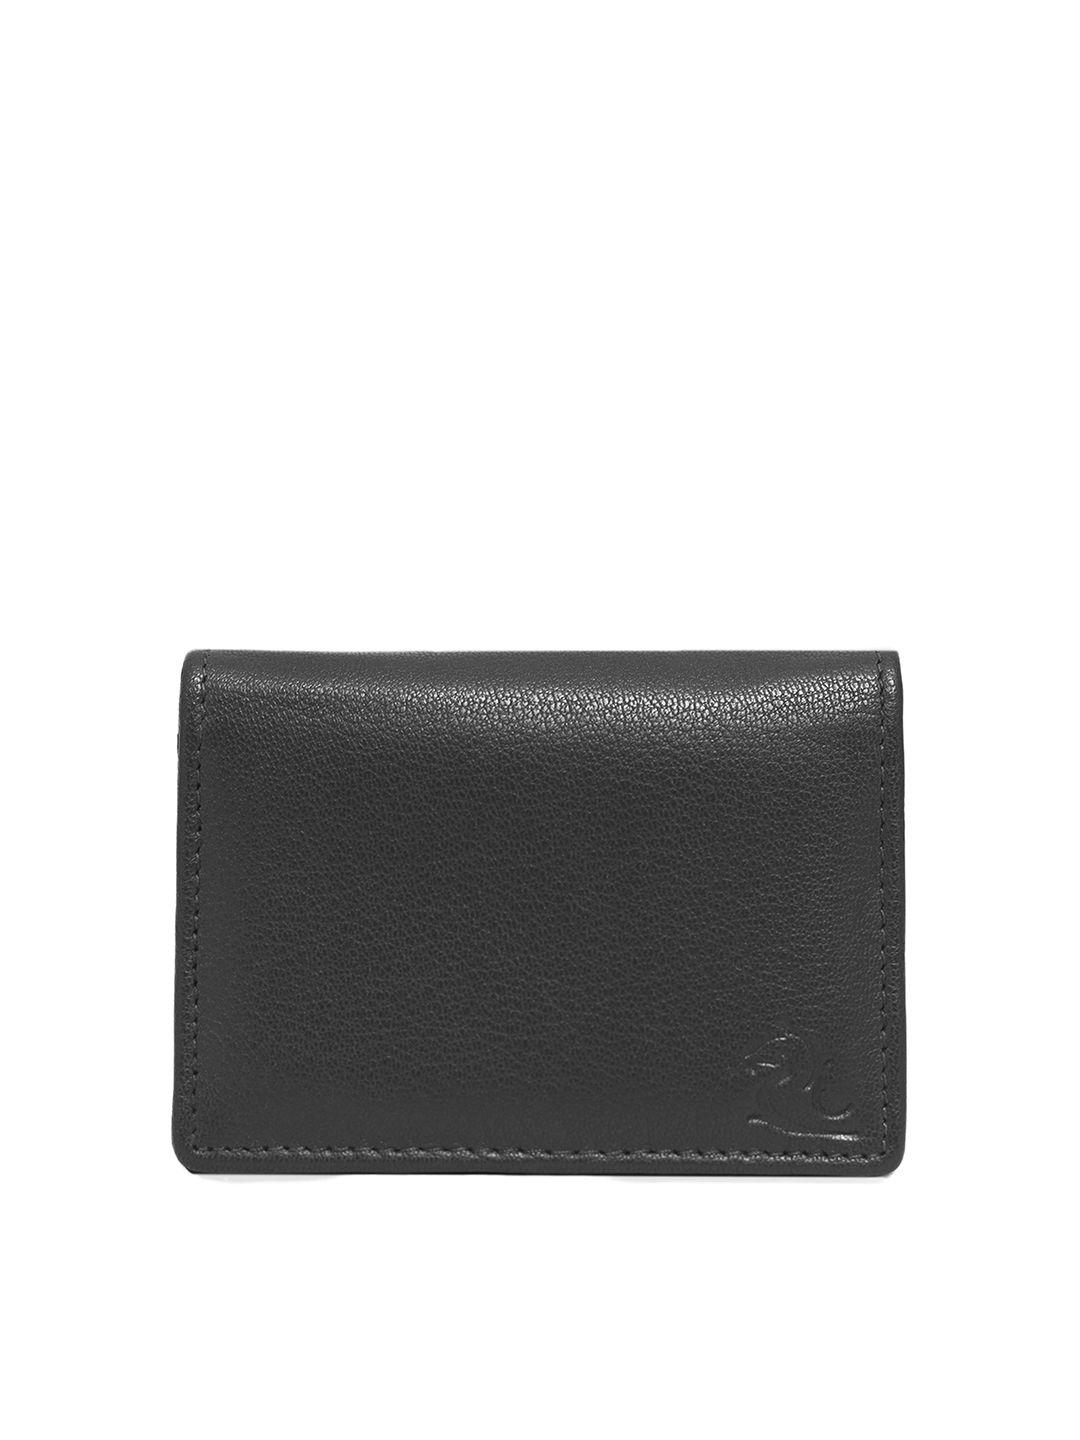 kara unisex black leather card holder